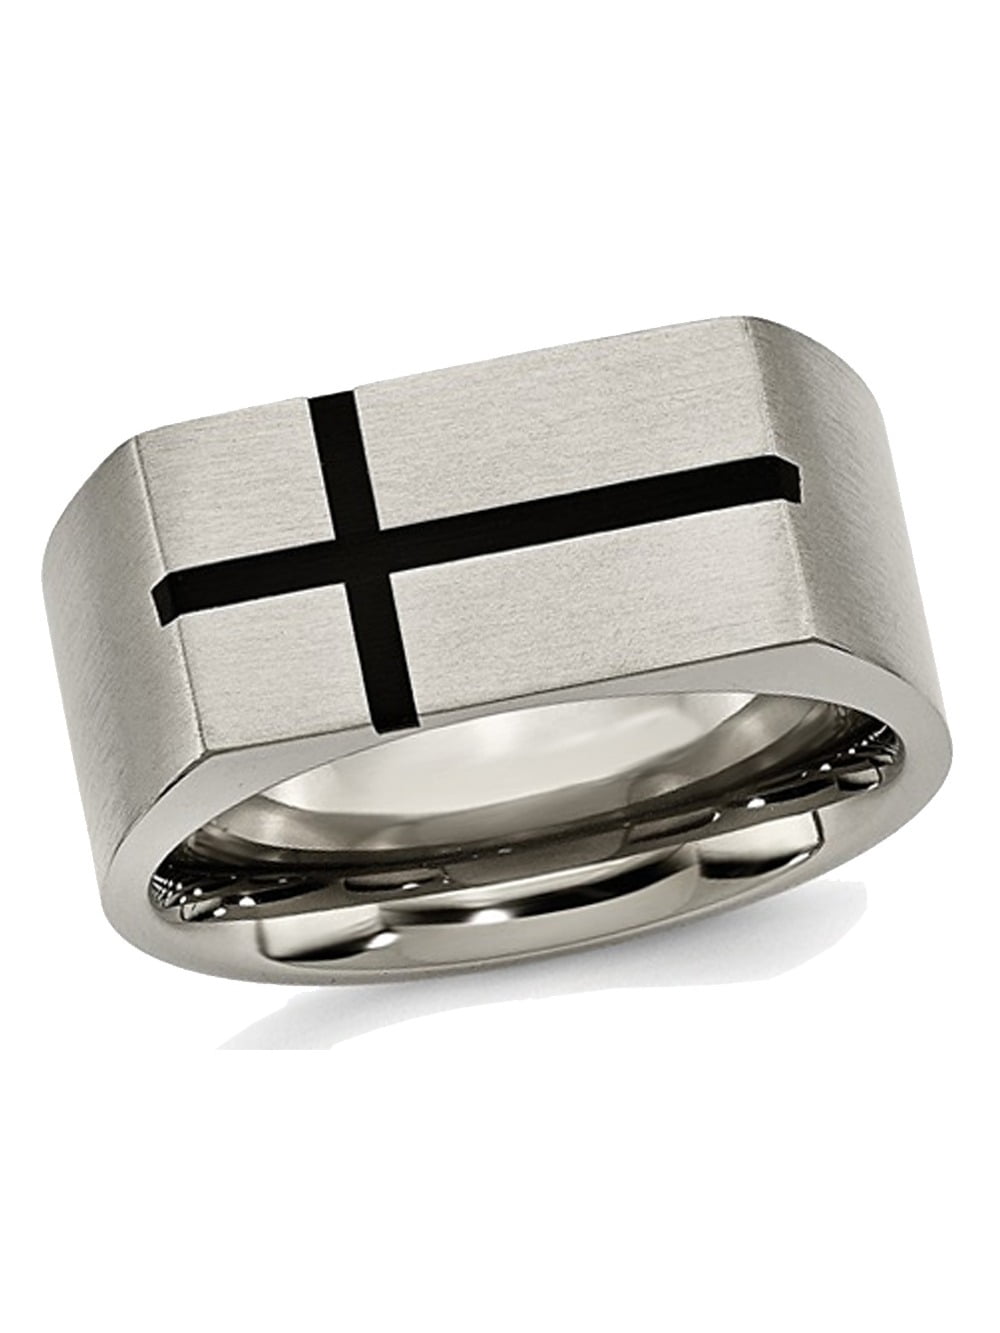 Jewelry Stores Network Mens Titanium 10mm Black Enamel Cross Brushed Wedding Band Ring 